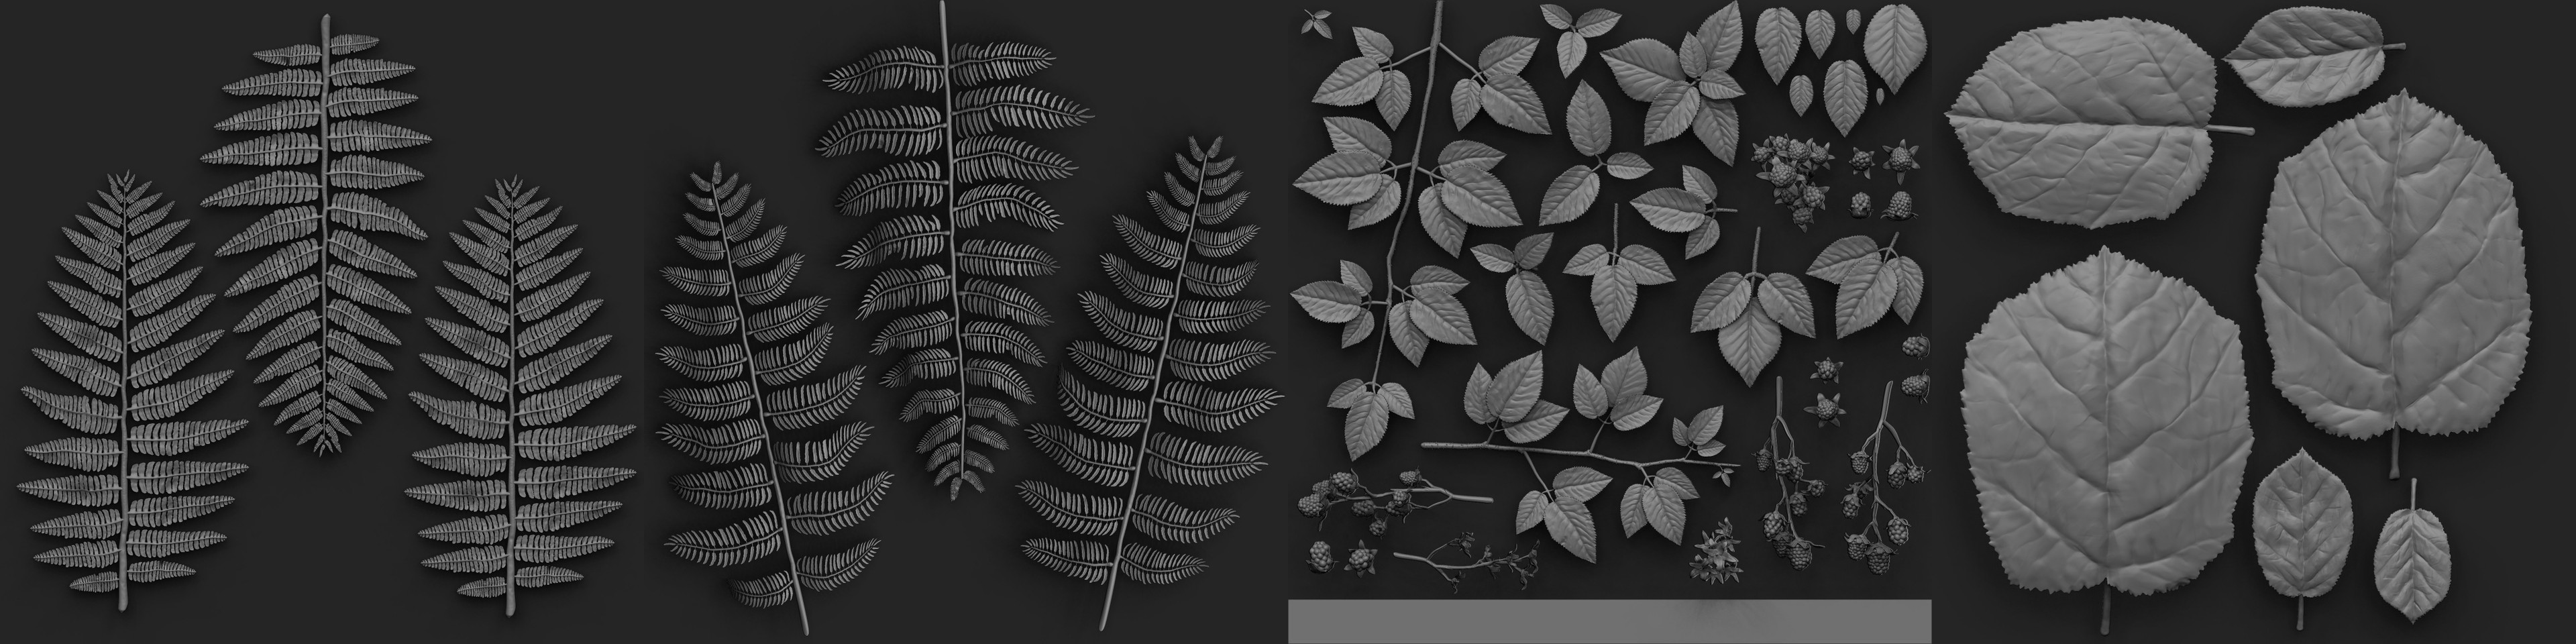 zBrush: Foliage Atlases Sculpts